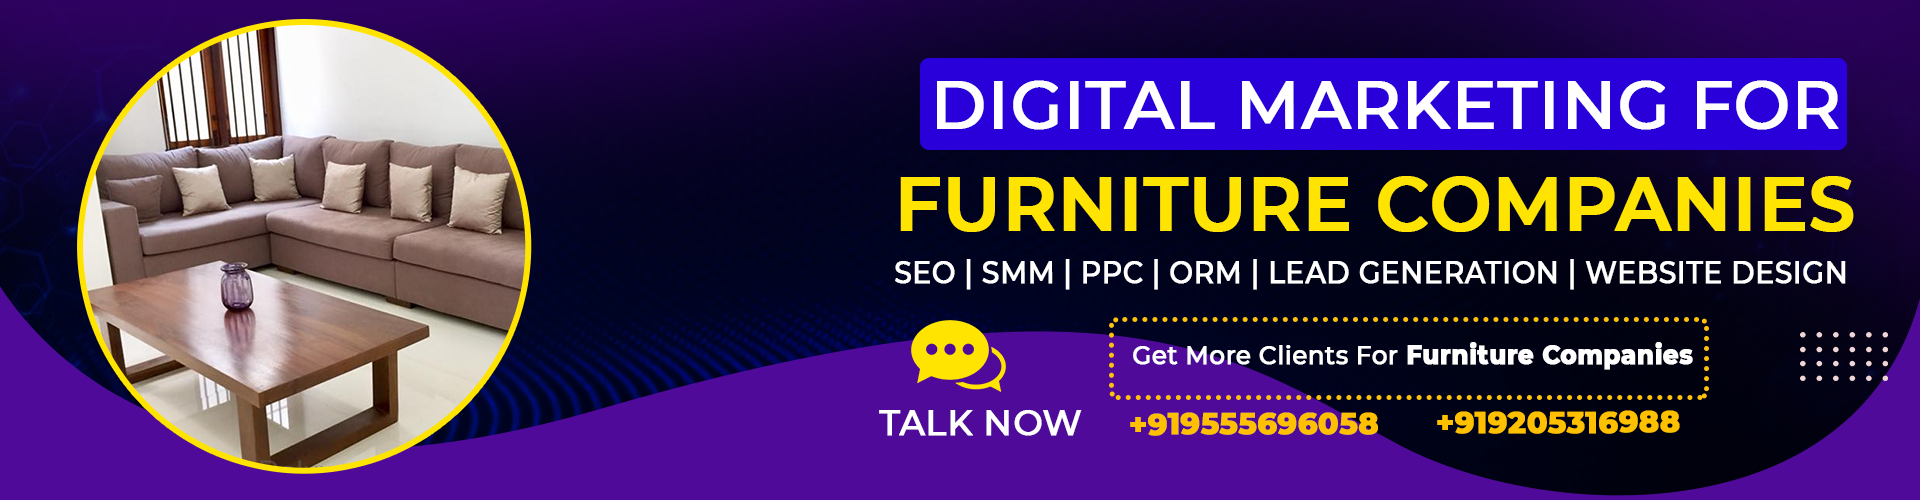 digital-marketing-for-furniture-companies